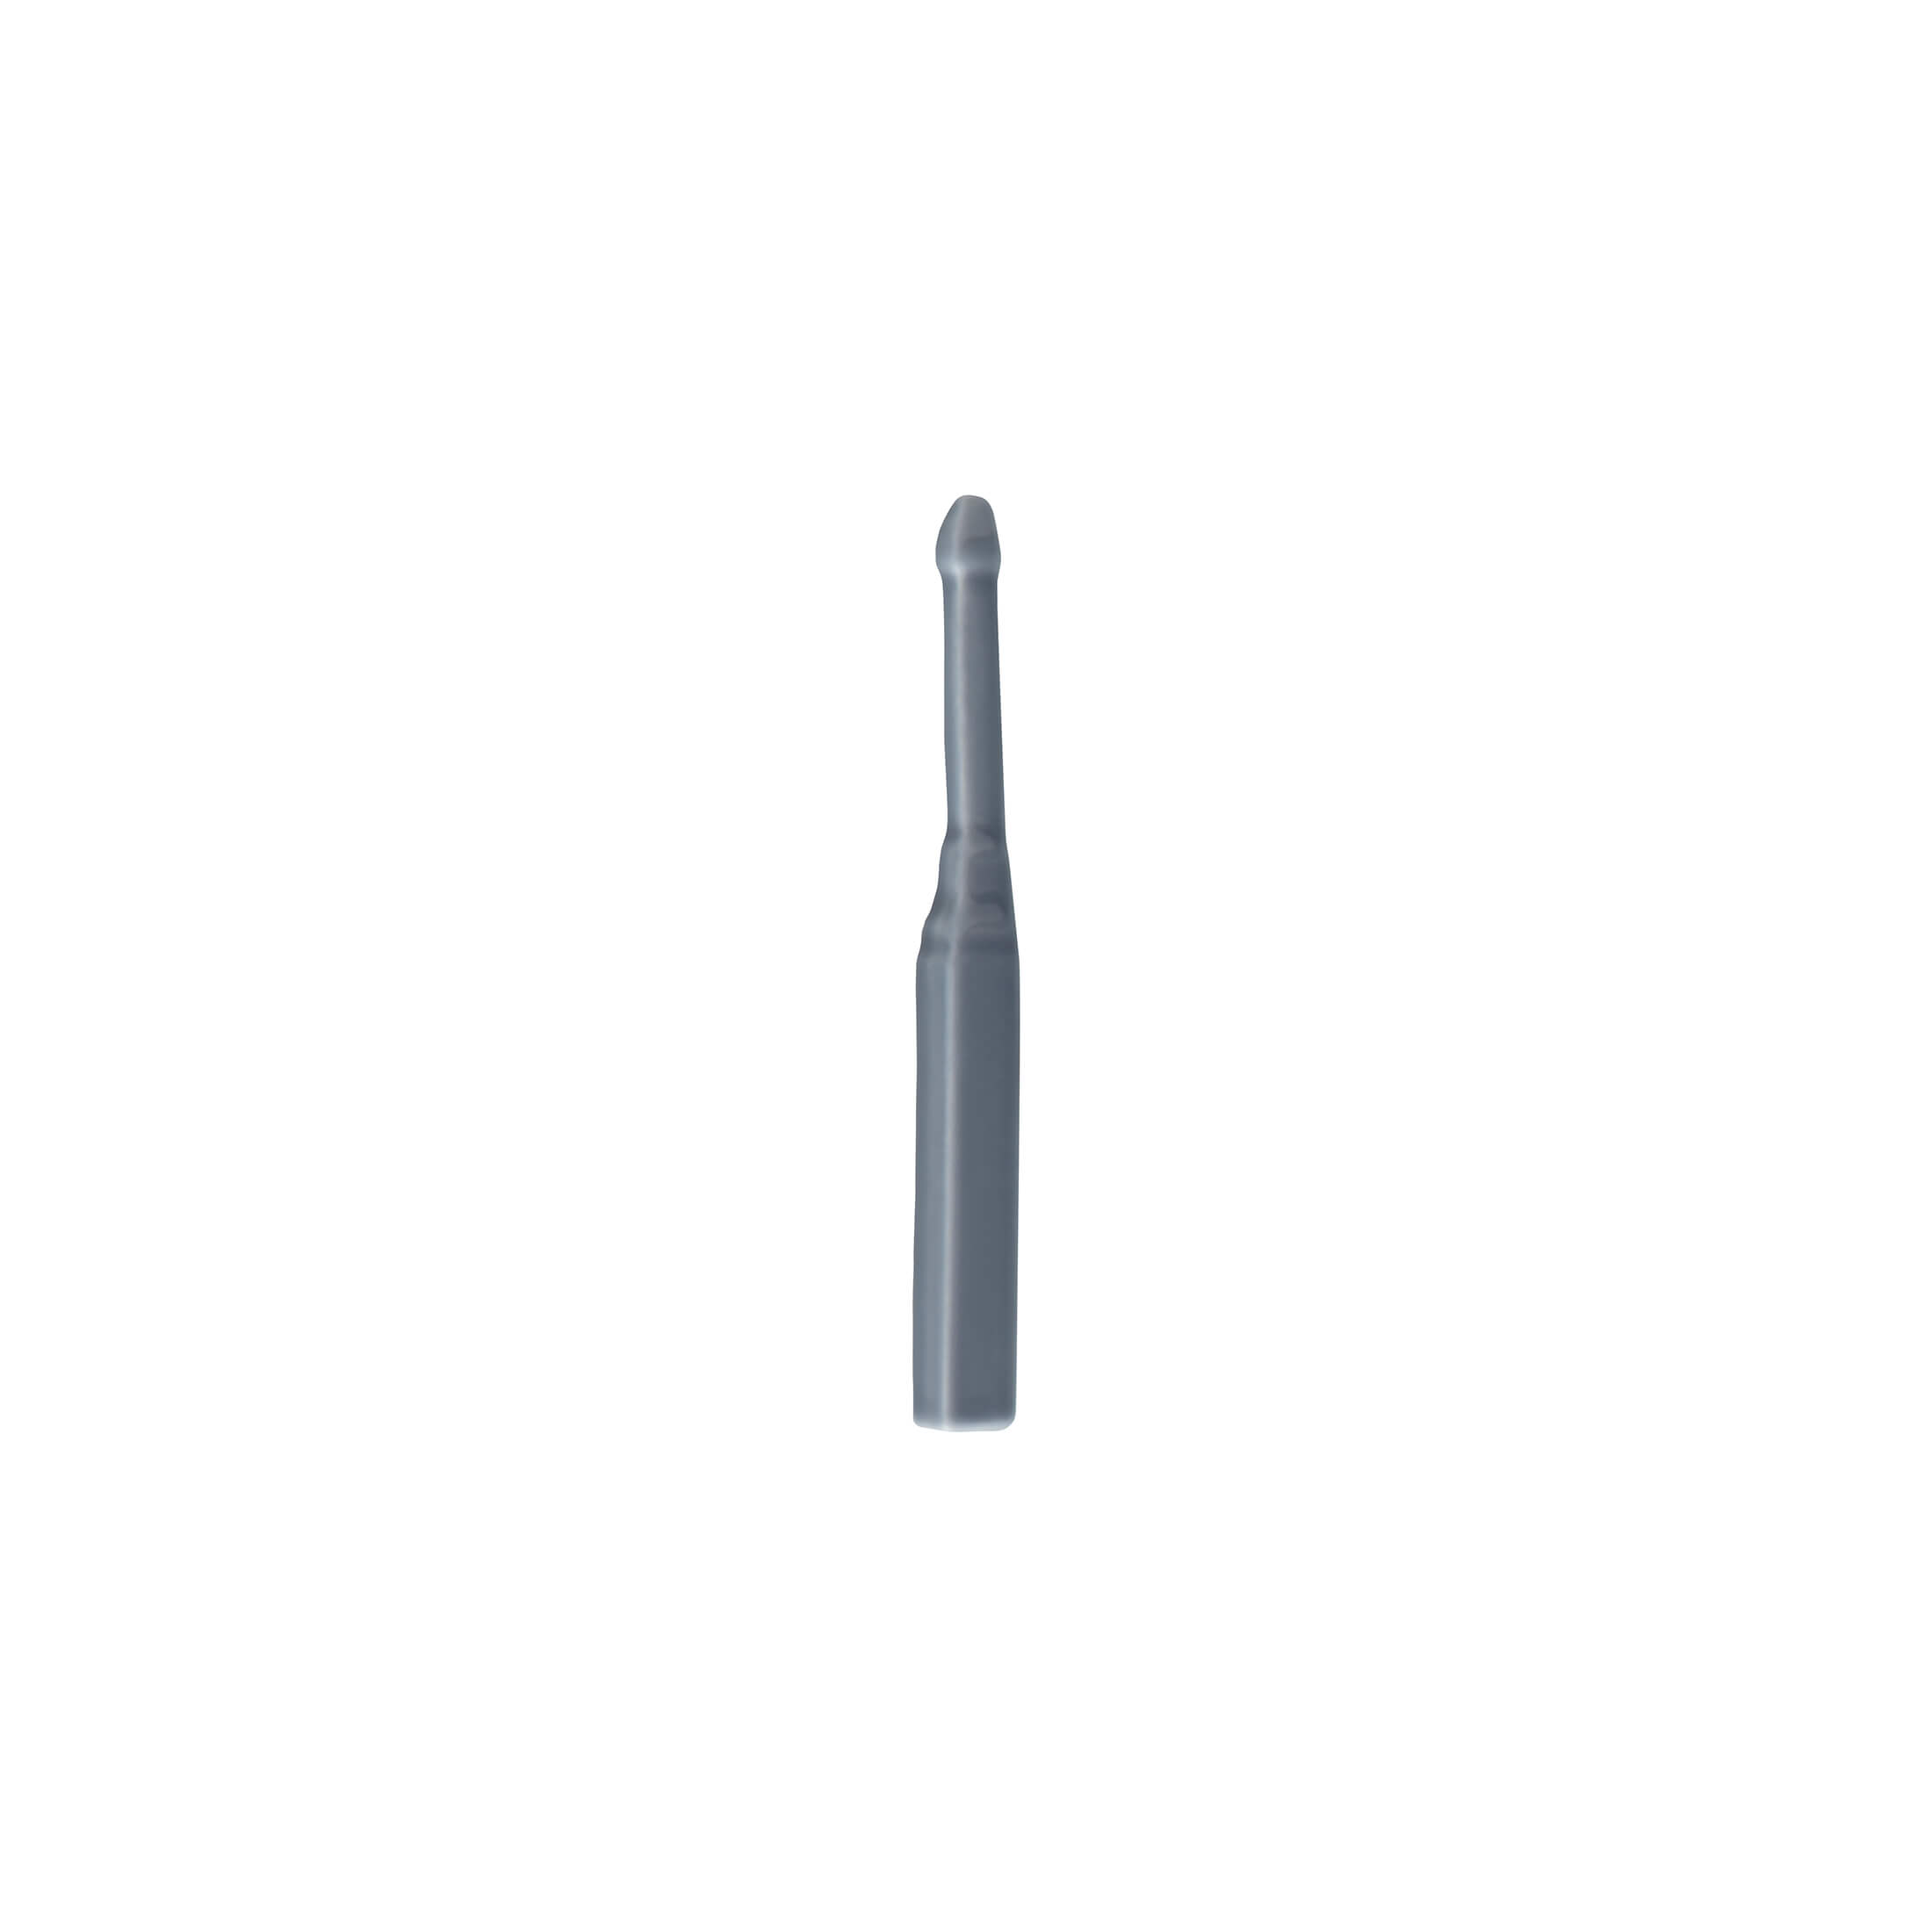 ADNE5607 - ANGULO EXTERIOR RODAPIECLASICO - 15 cm X 15 cm